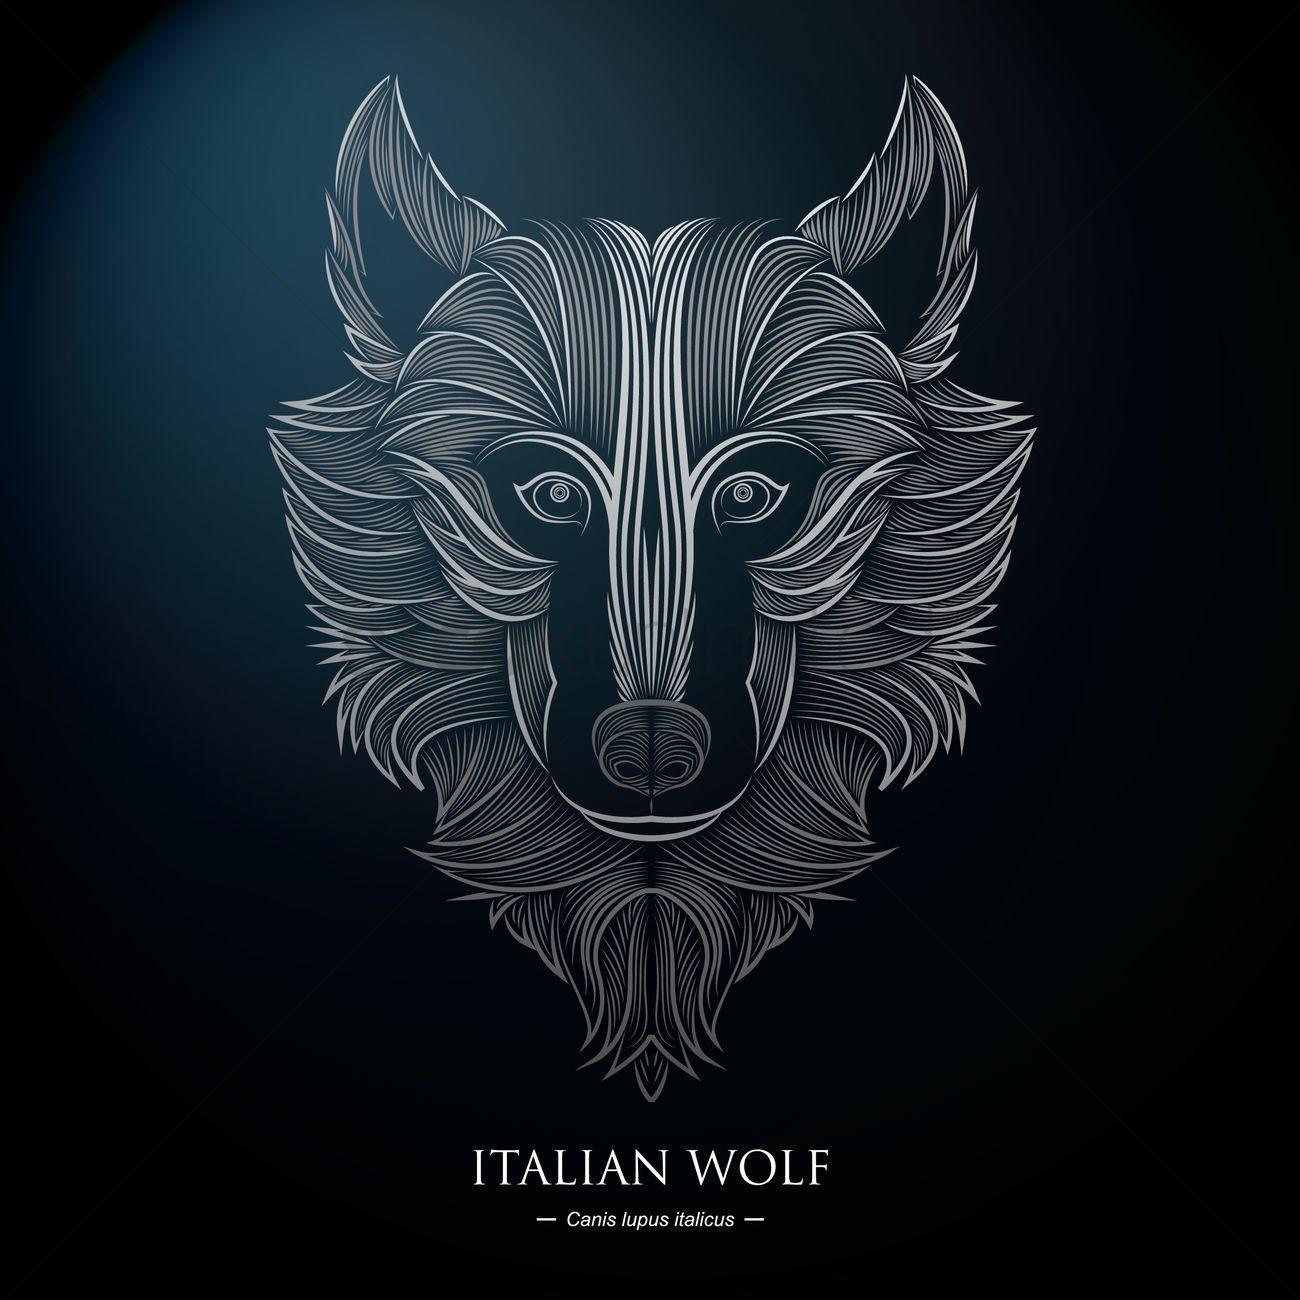 Italian wolf background Vector Image